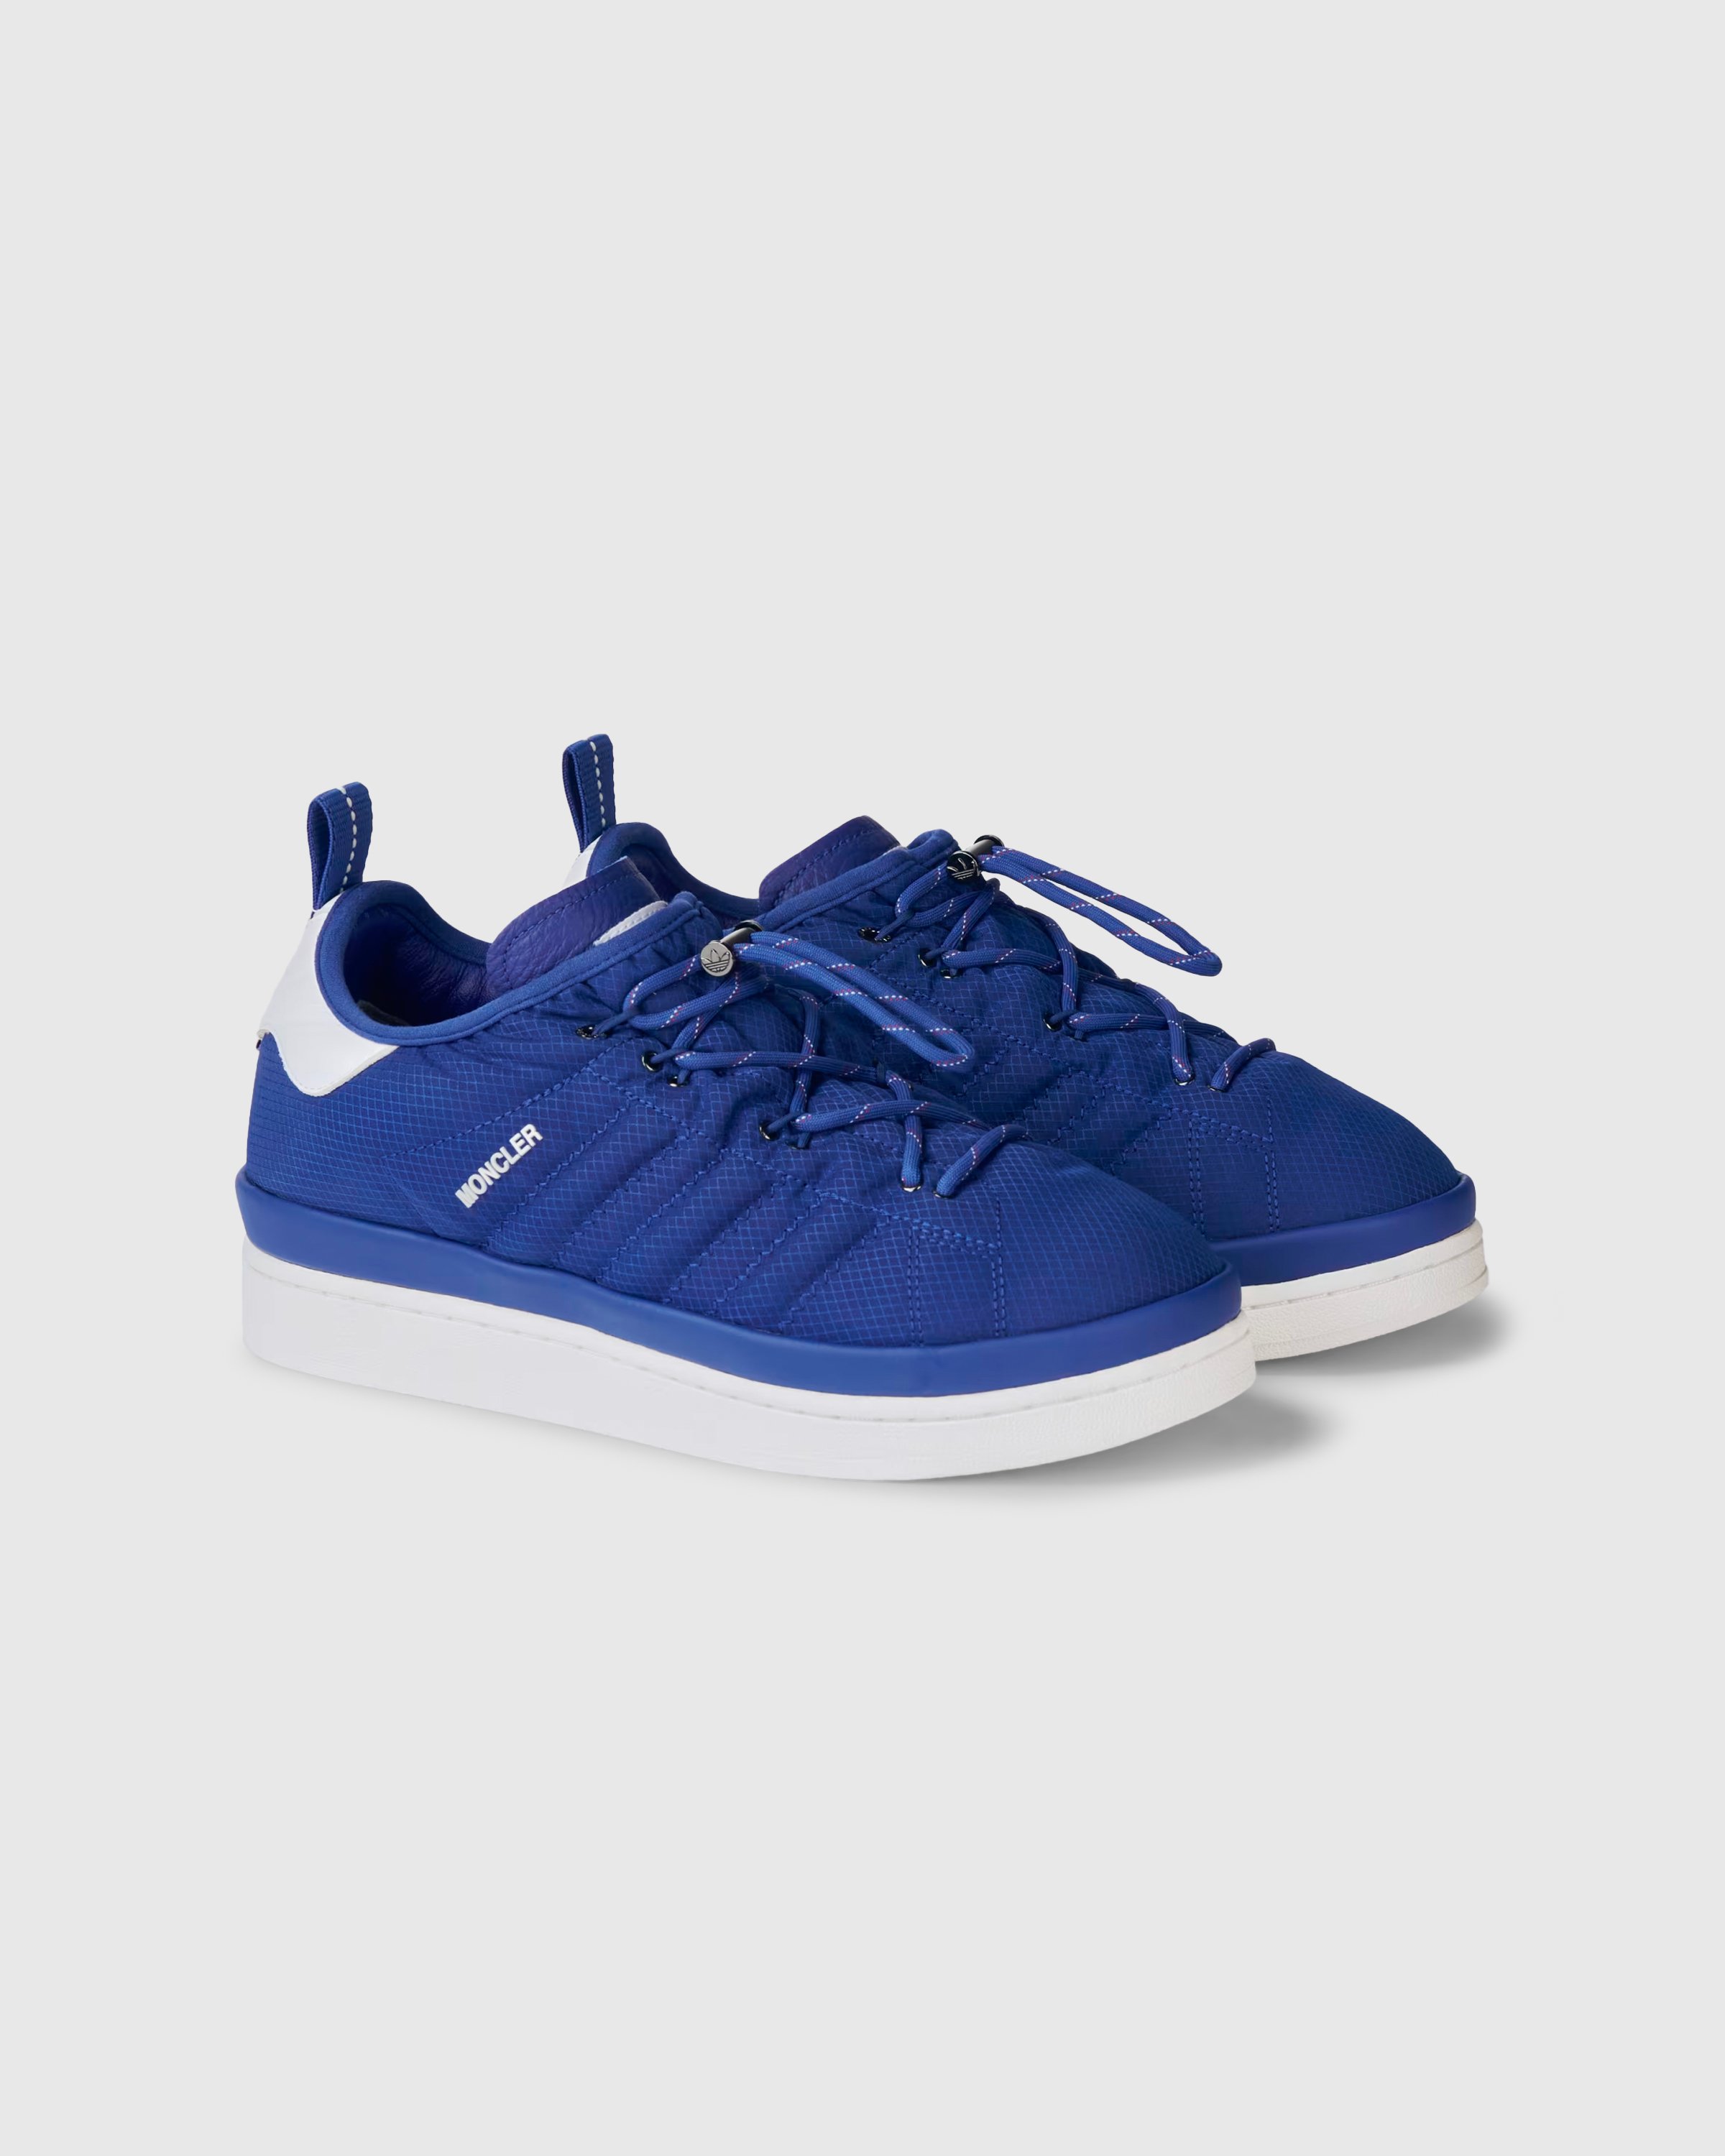 Moncler x adidas Originals - Campus Low Top Sneakers Blue - Footwear - Blue - Image 2